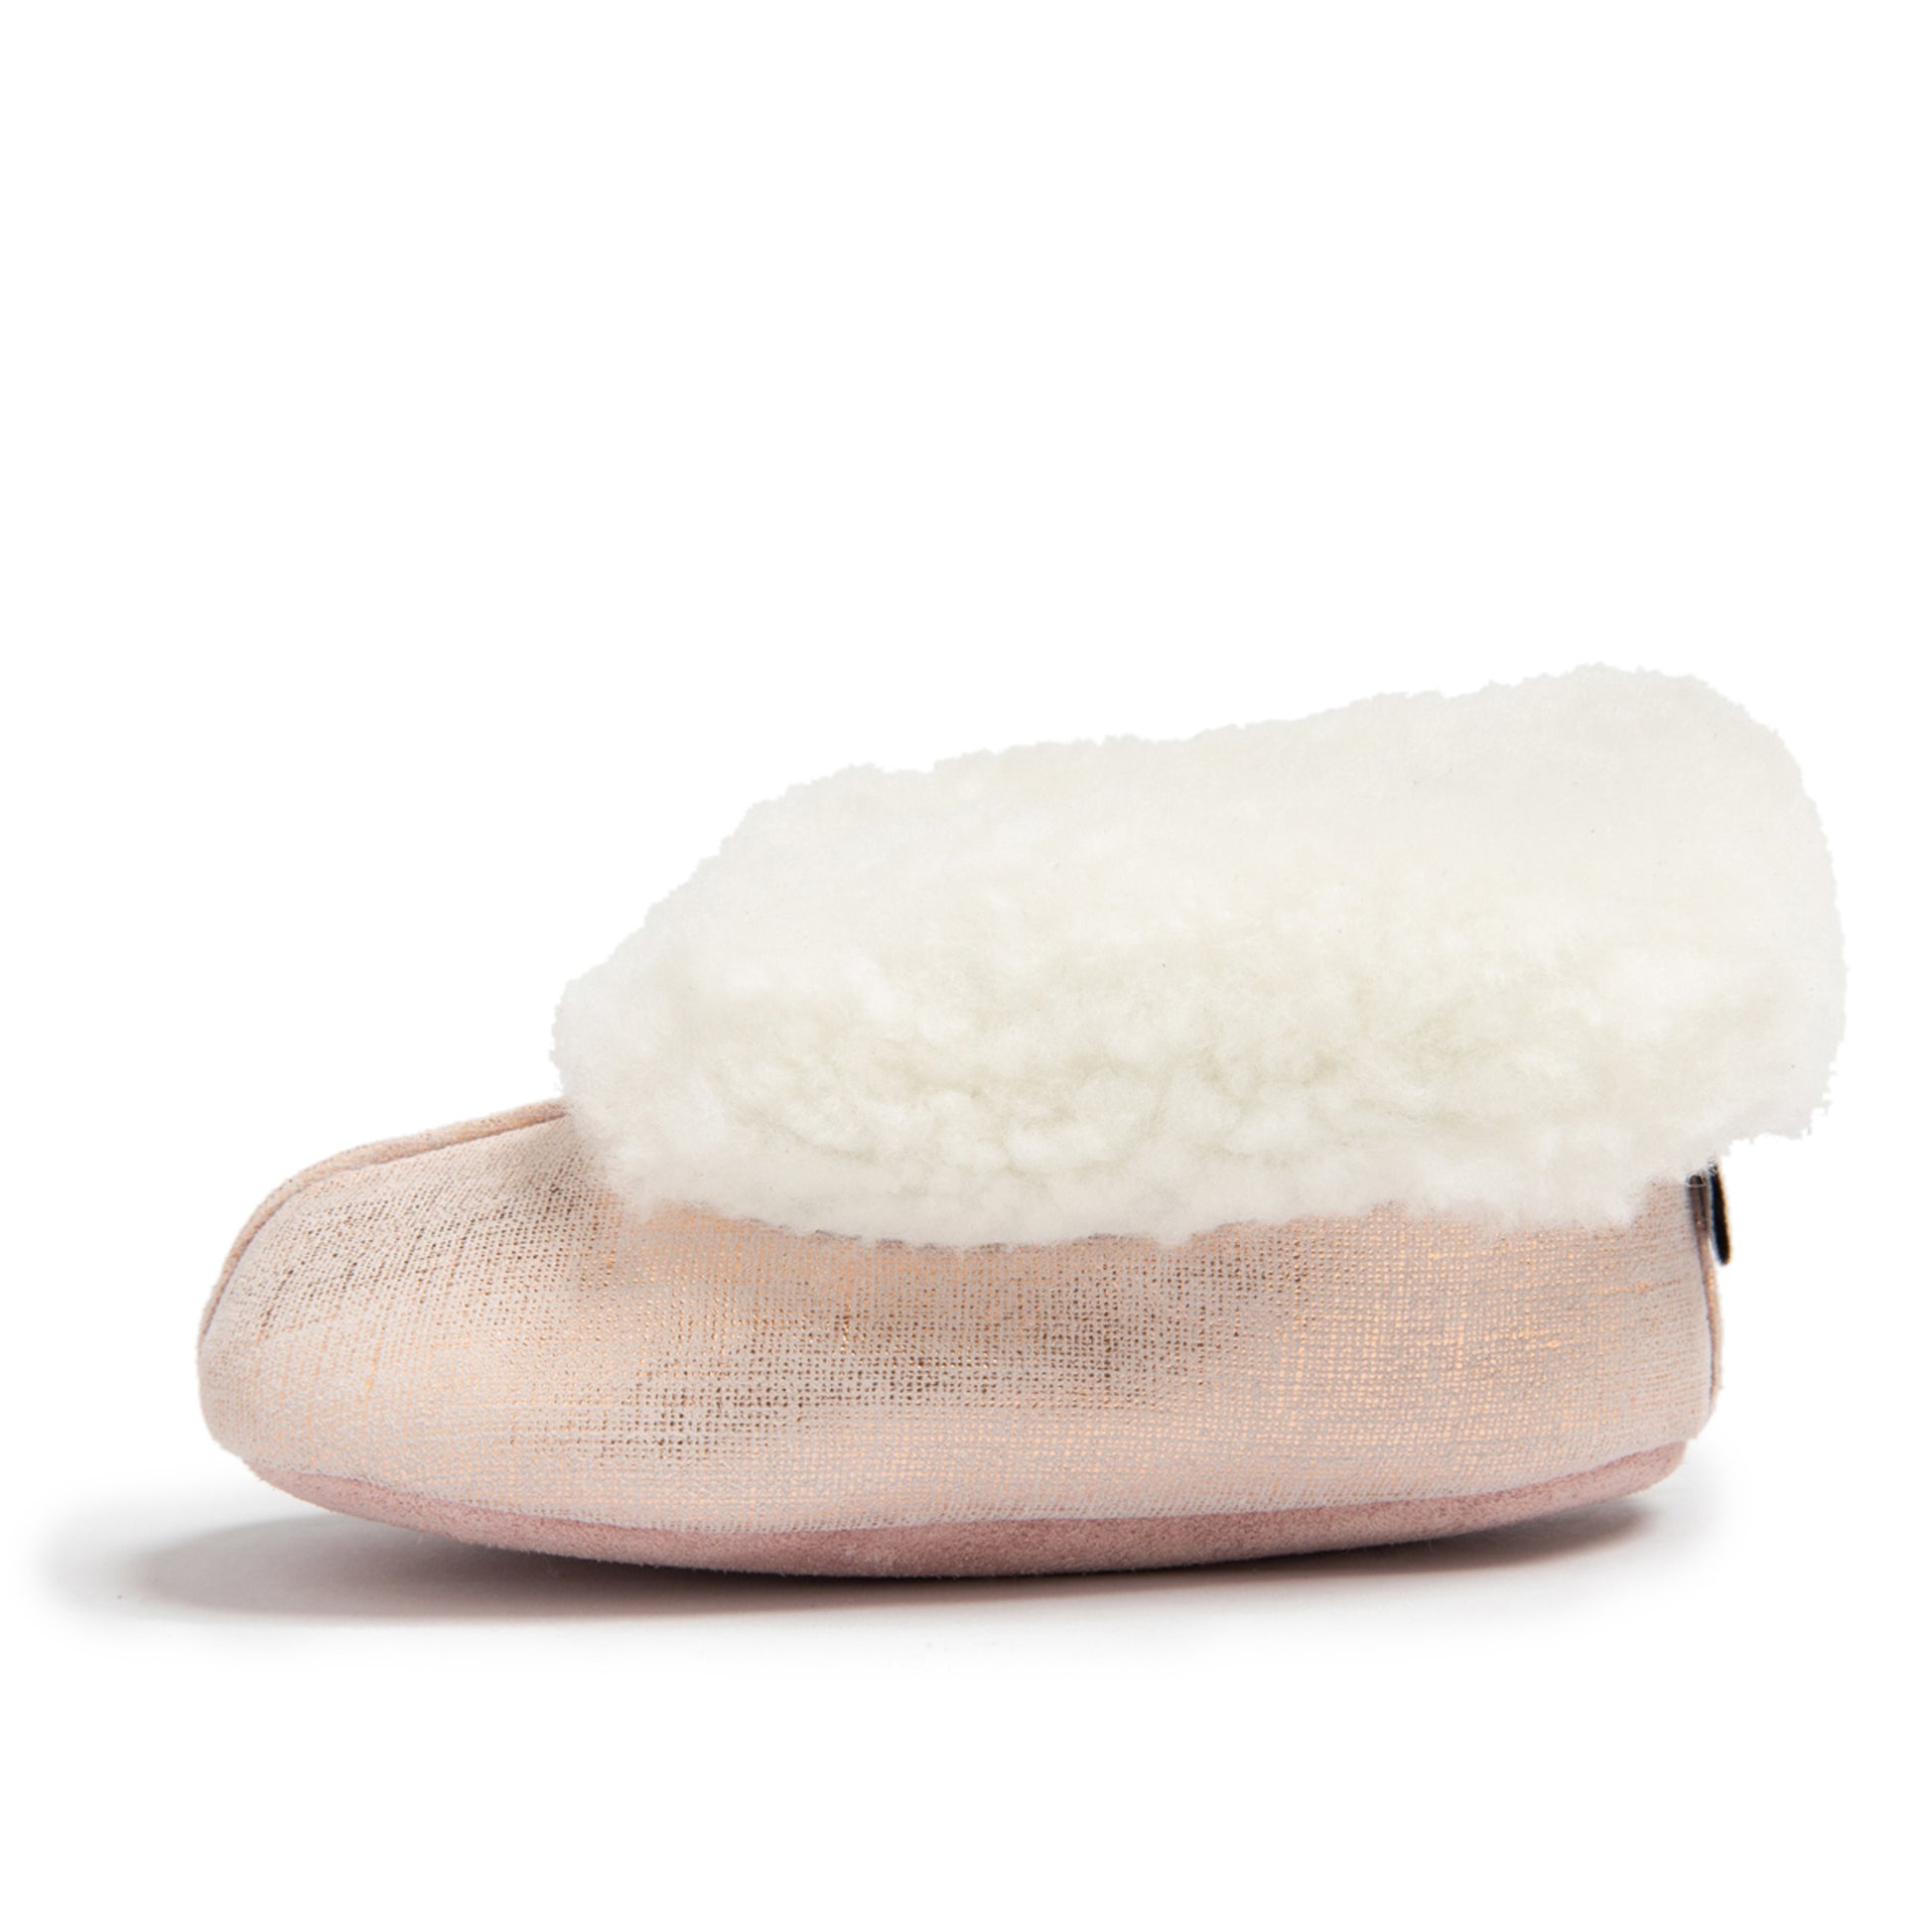 PRANCER Soft Sole Slippers Pink & White (side view) - Shop Online | shooshoos.co.za